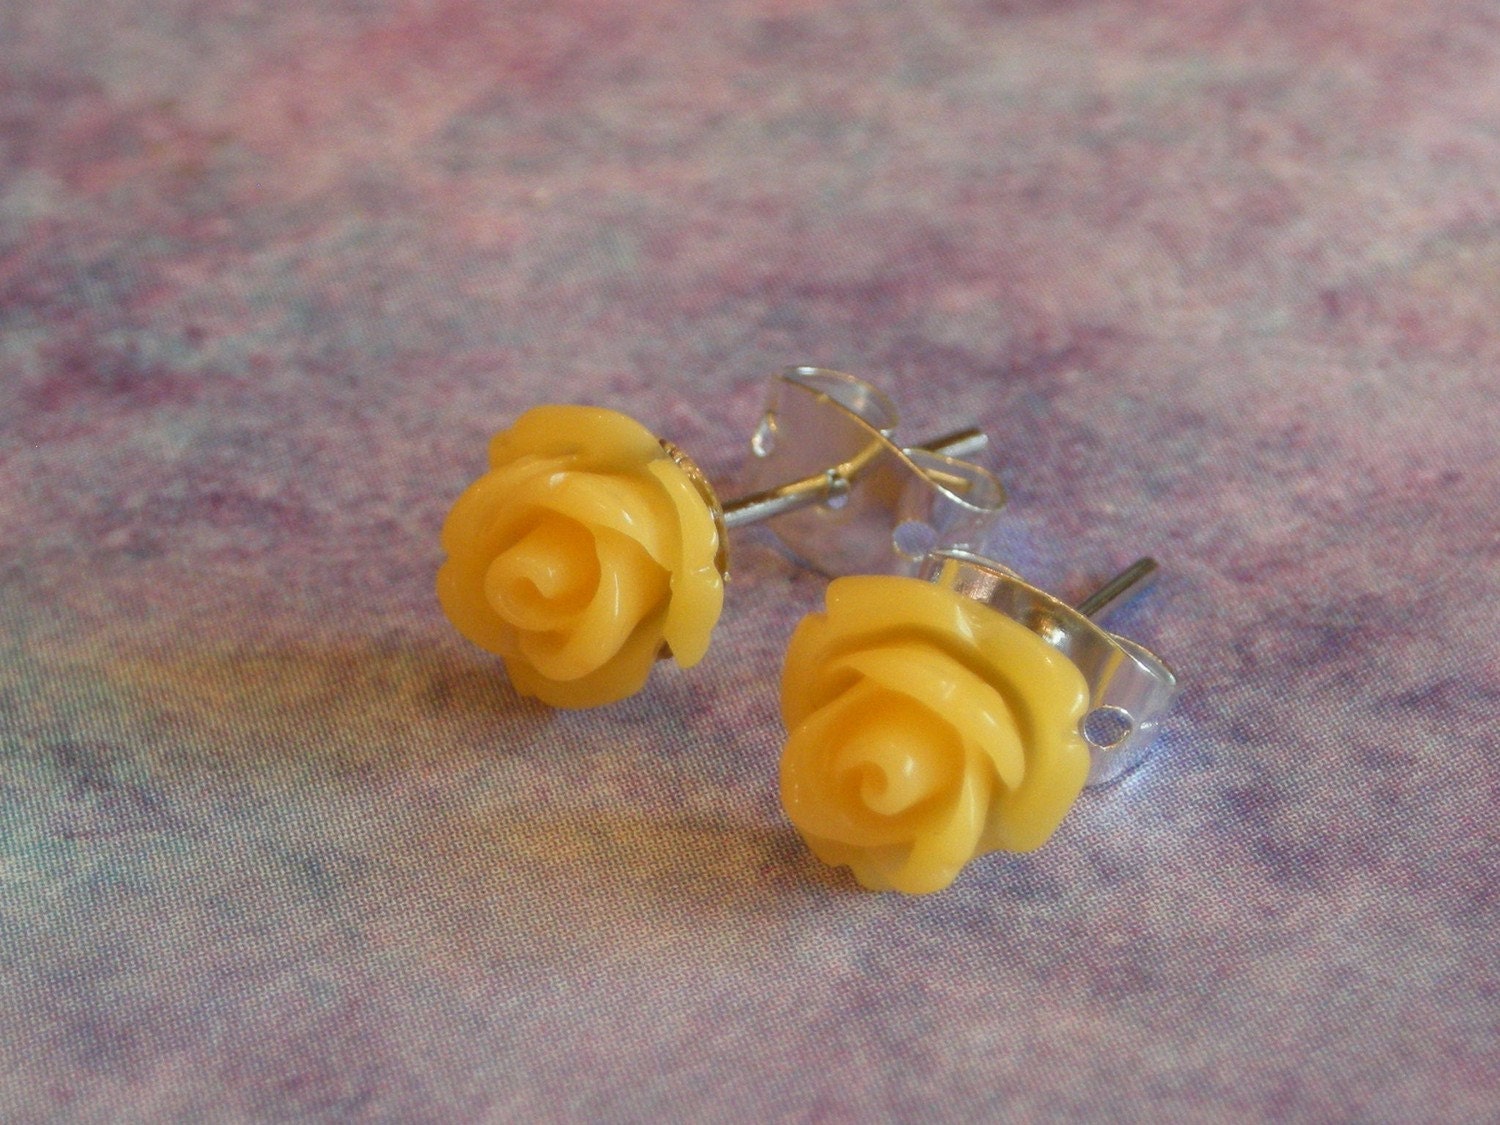 Teeny tiny apricot rose earrings 7mm